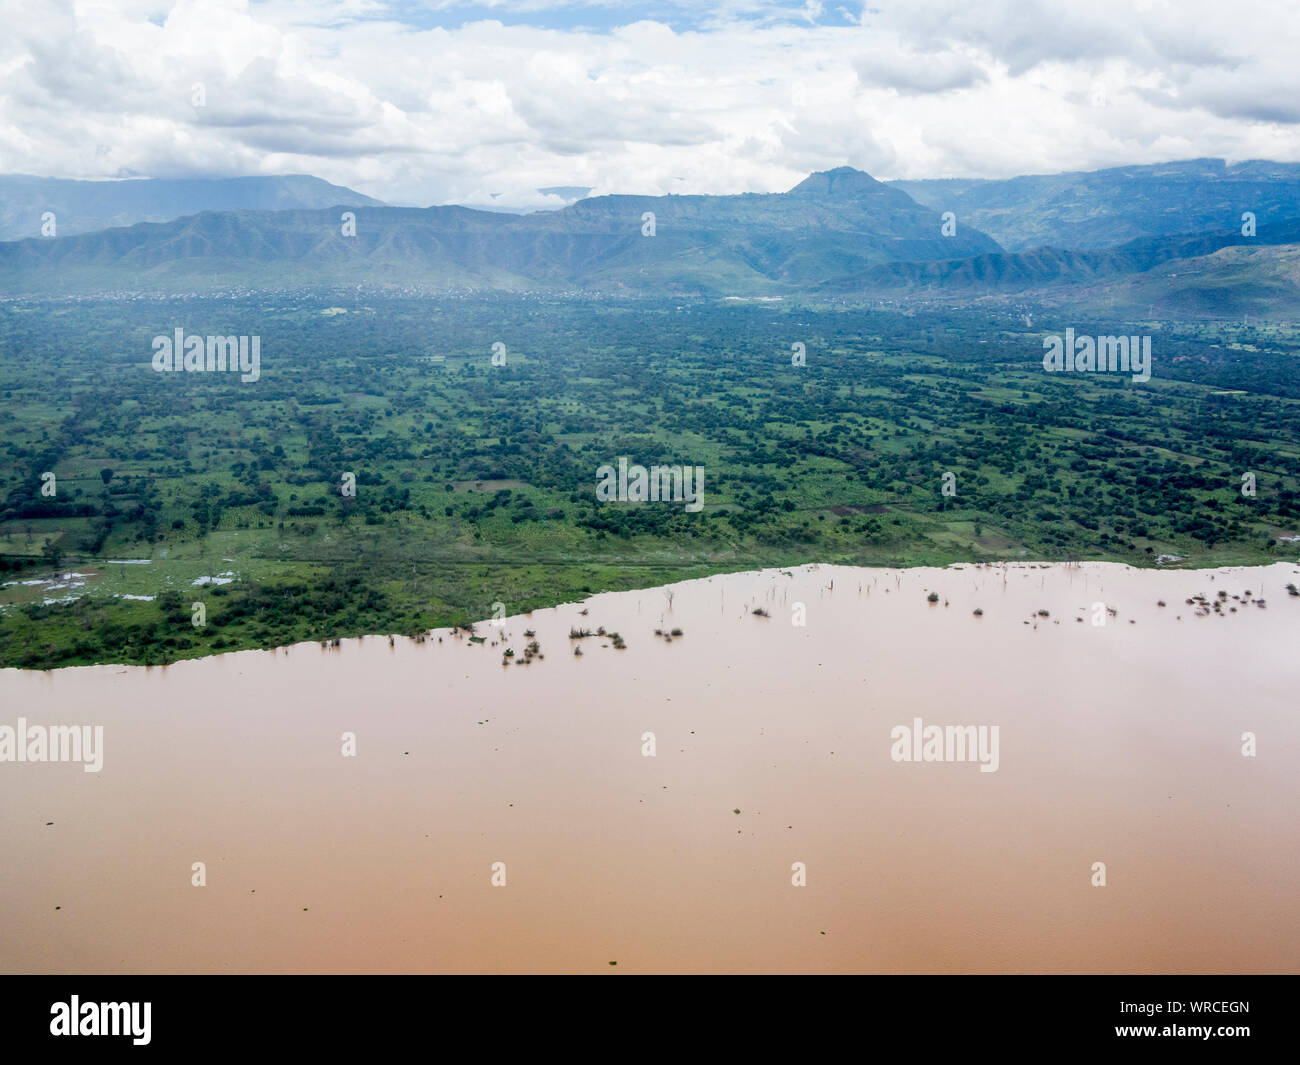 Aerial view of Abaya Lake and Arba Minch, Ethiopia. Stock Photo